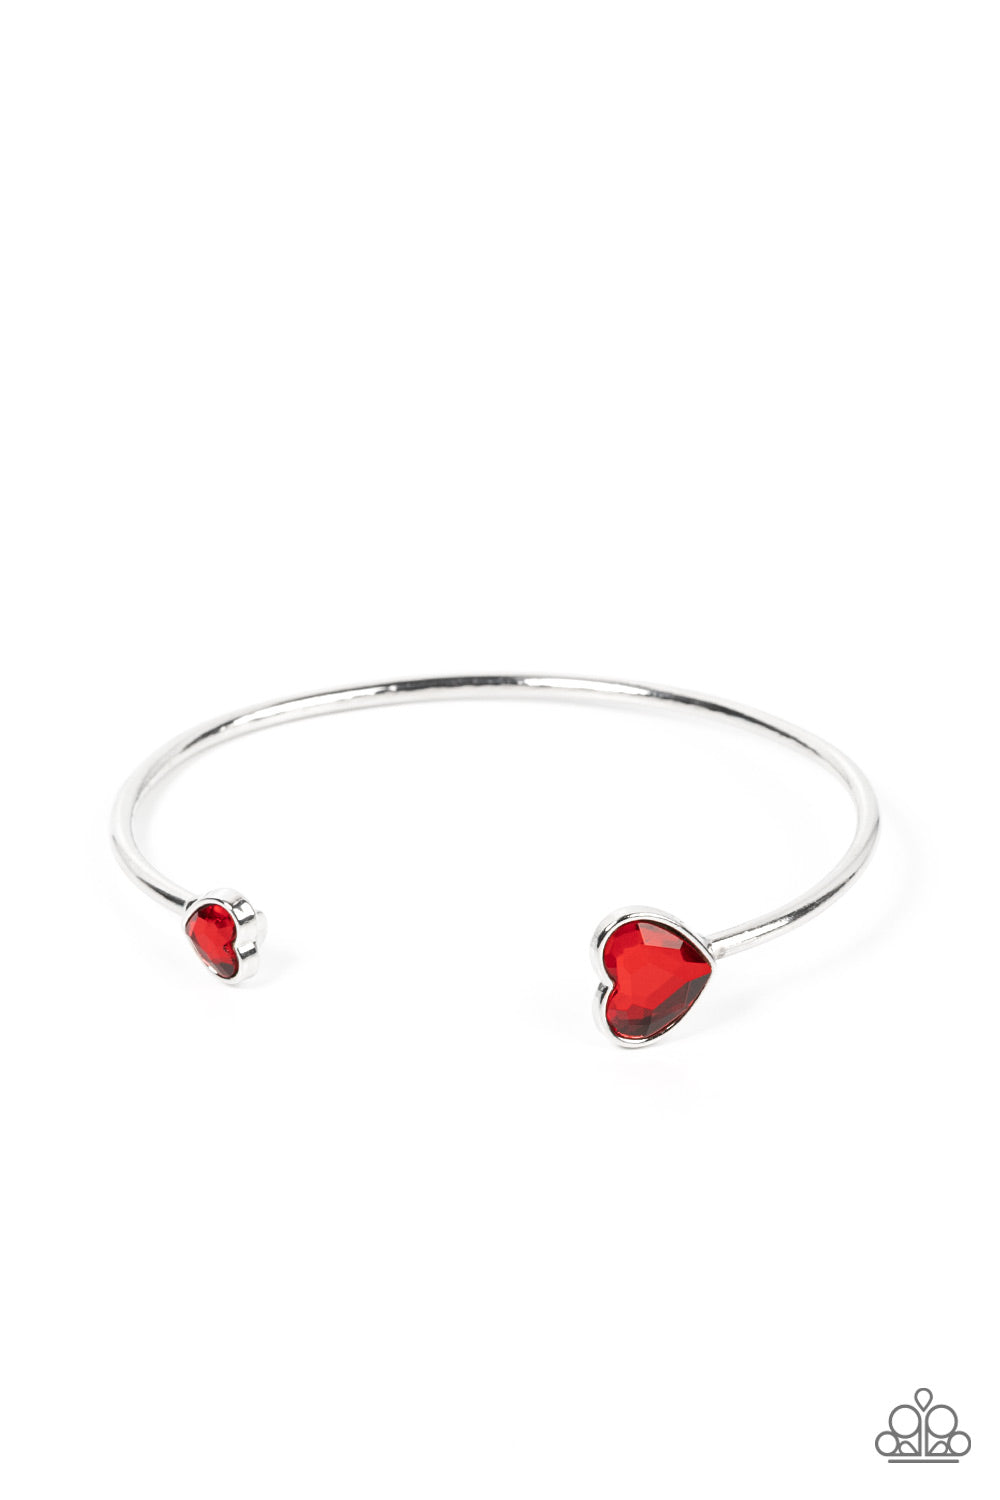 Unrequited Love - Red Heart Rhinestone Bracelet - Paparazzi Accessories